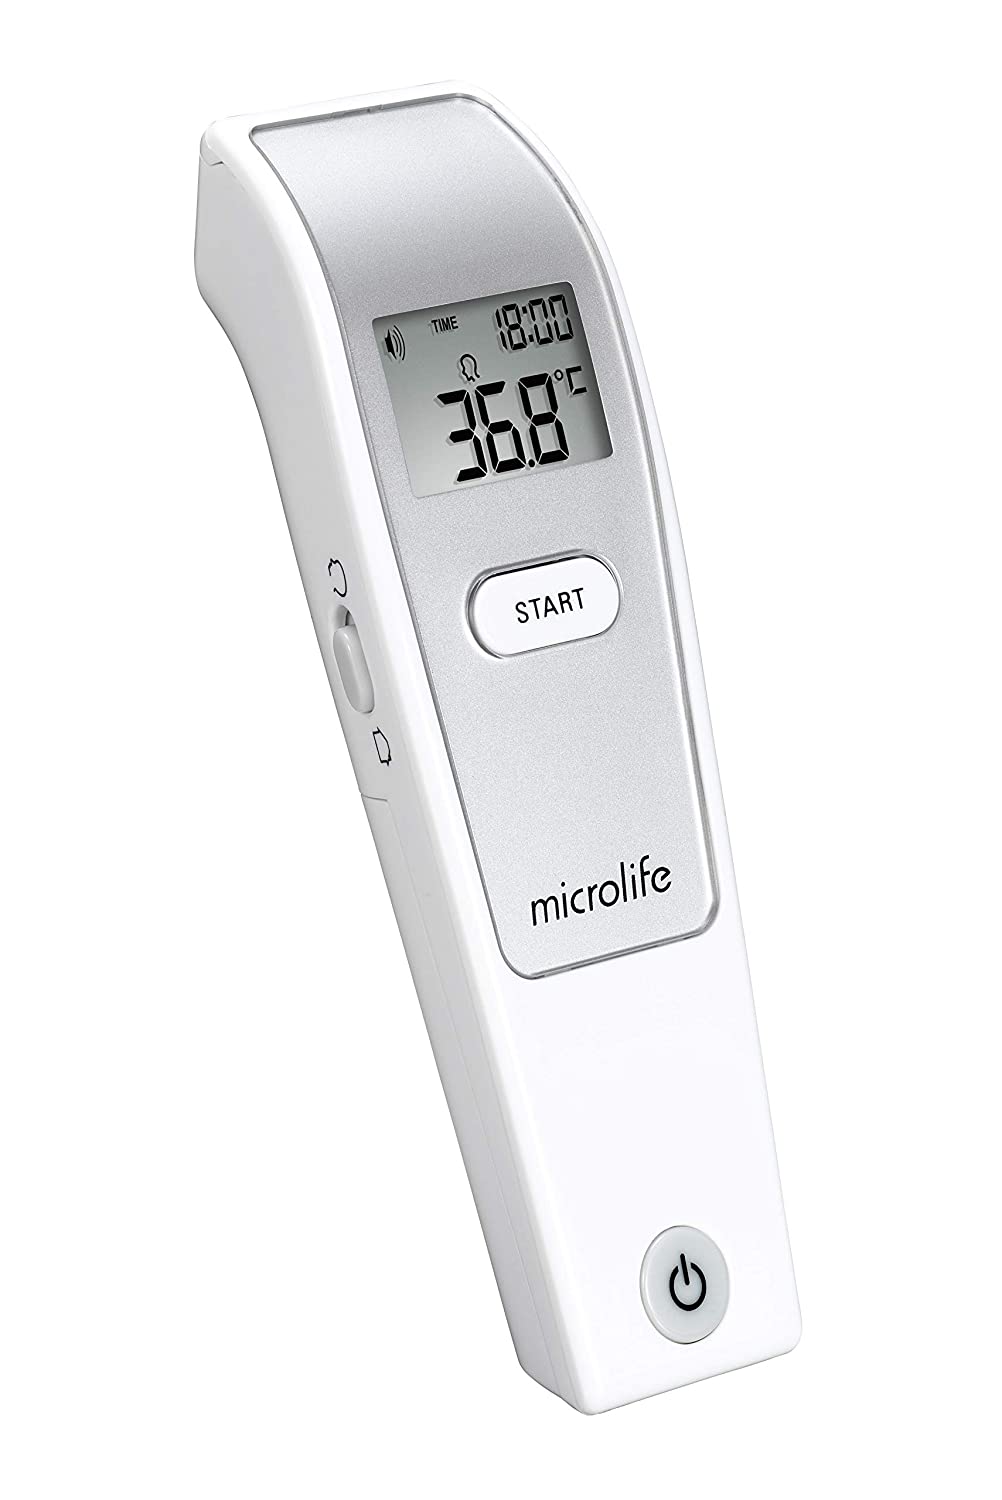 Microlife thermomètre auriculaire digital IR 210 à petit prix